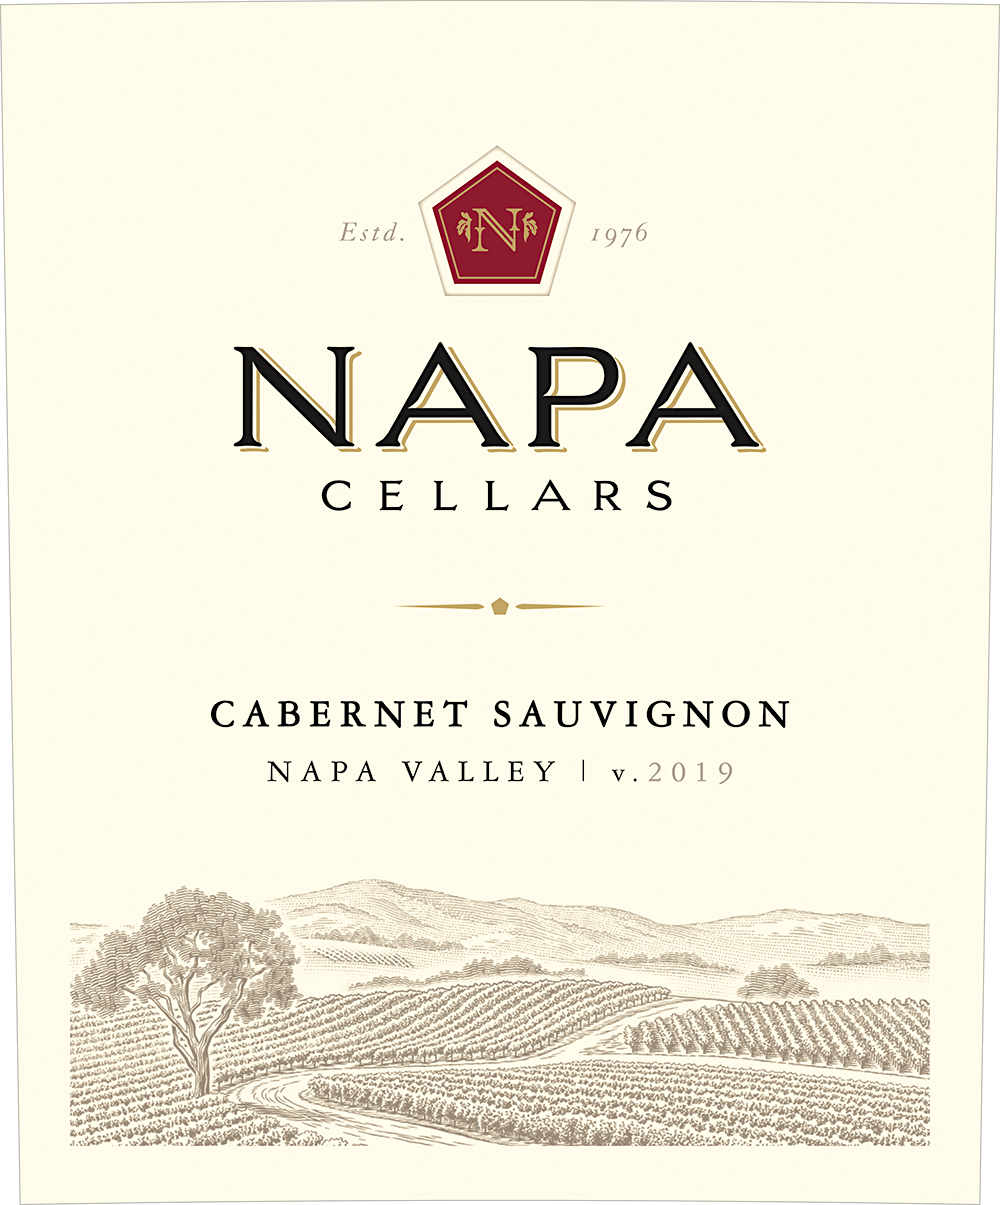 Label for Napa Cellars